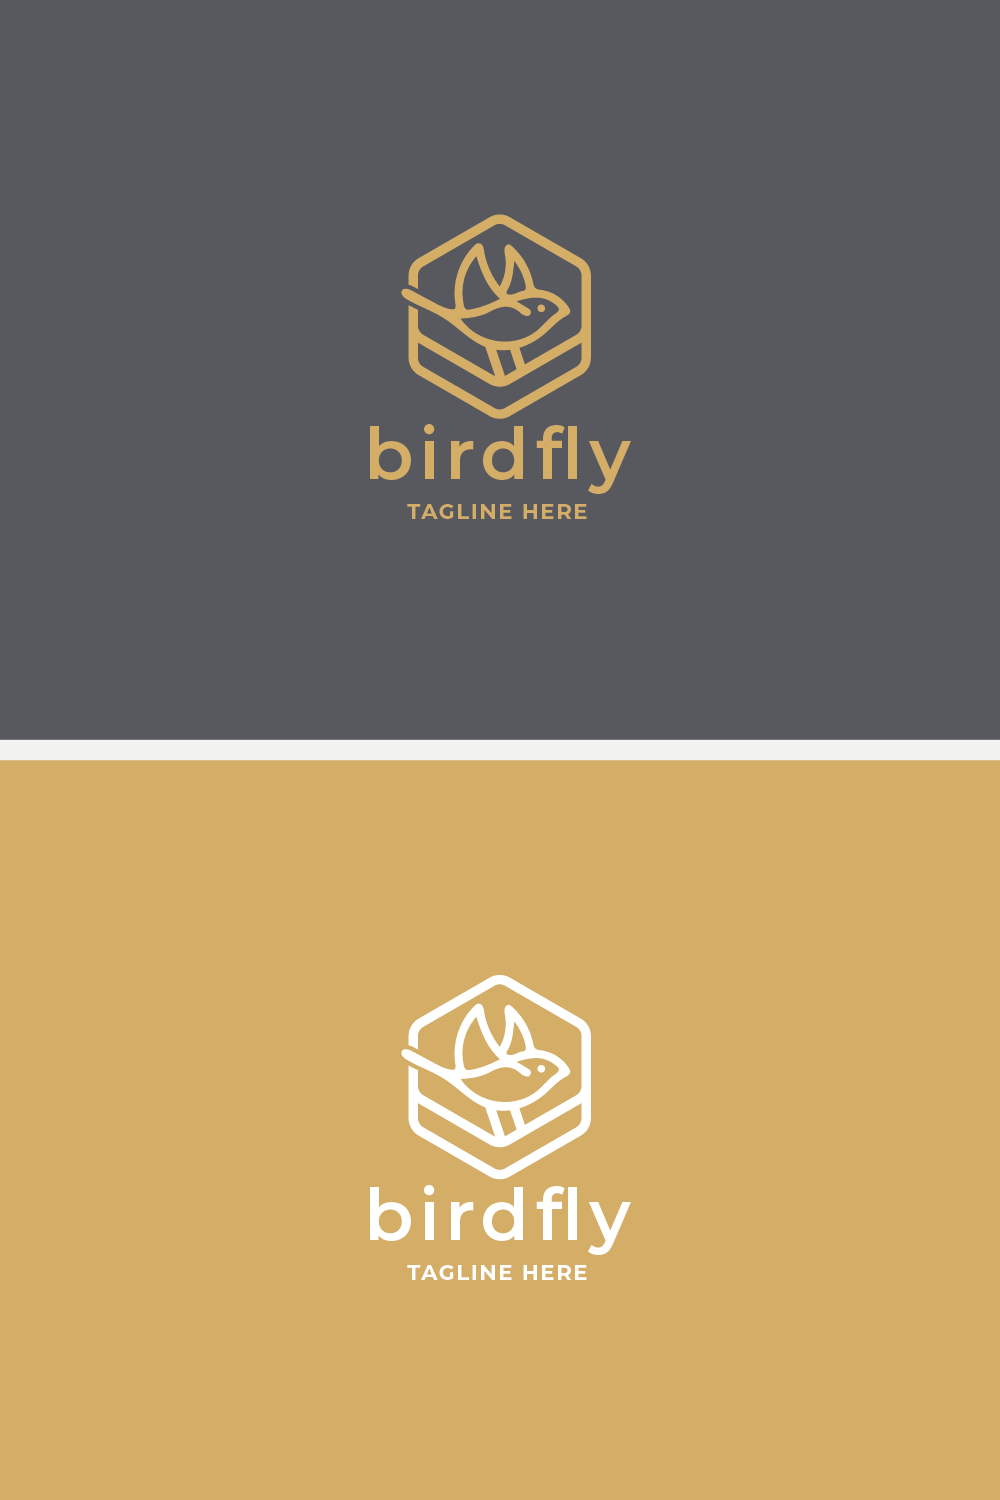 Bird Fly Logo pinterest preview image.